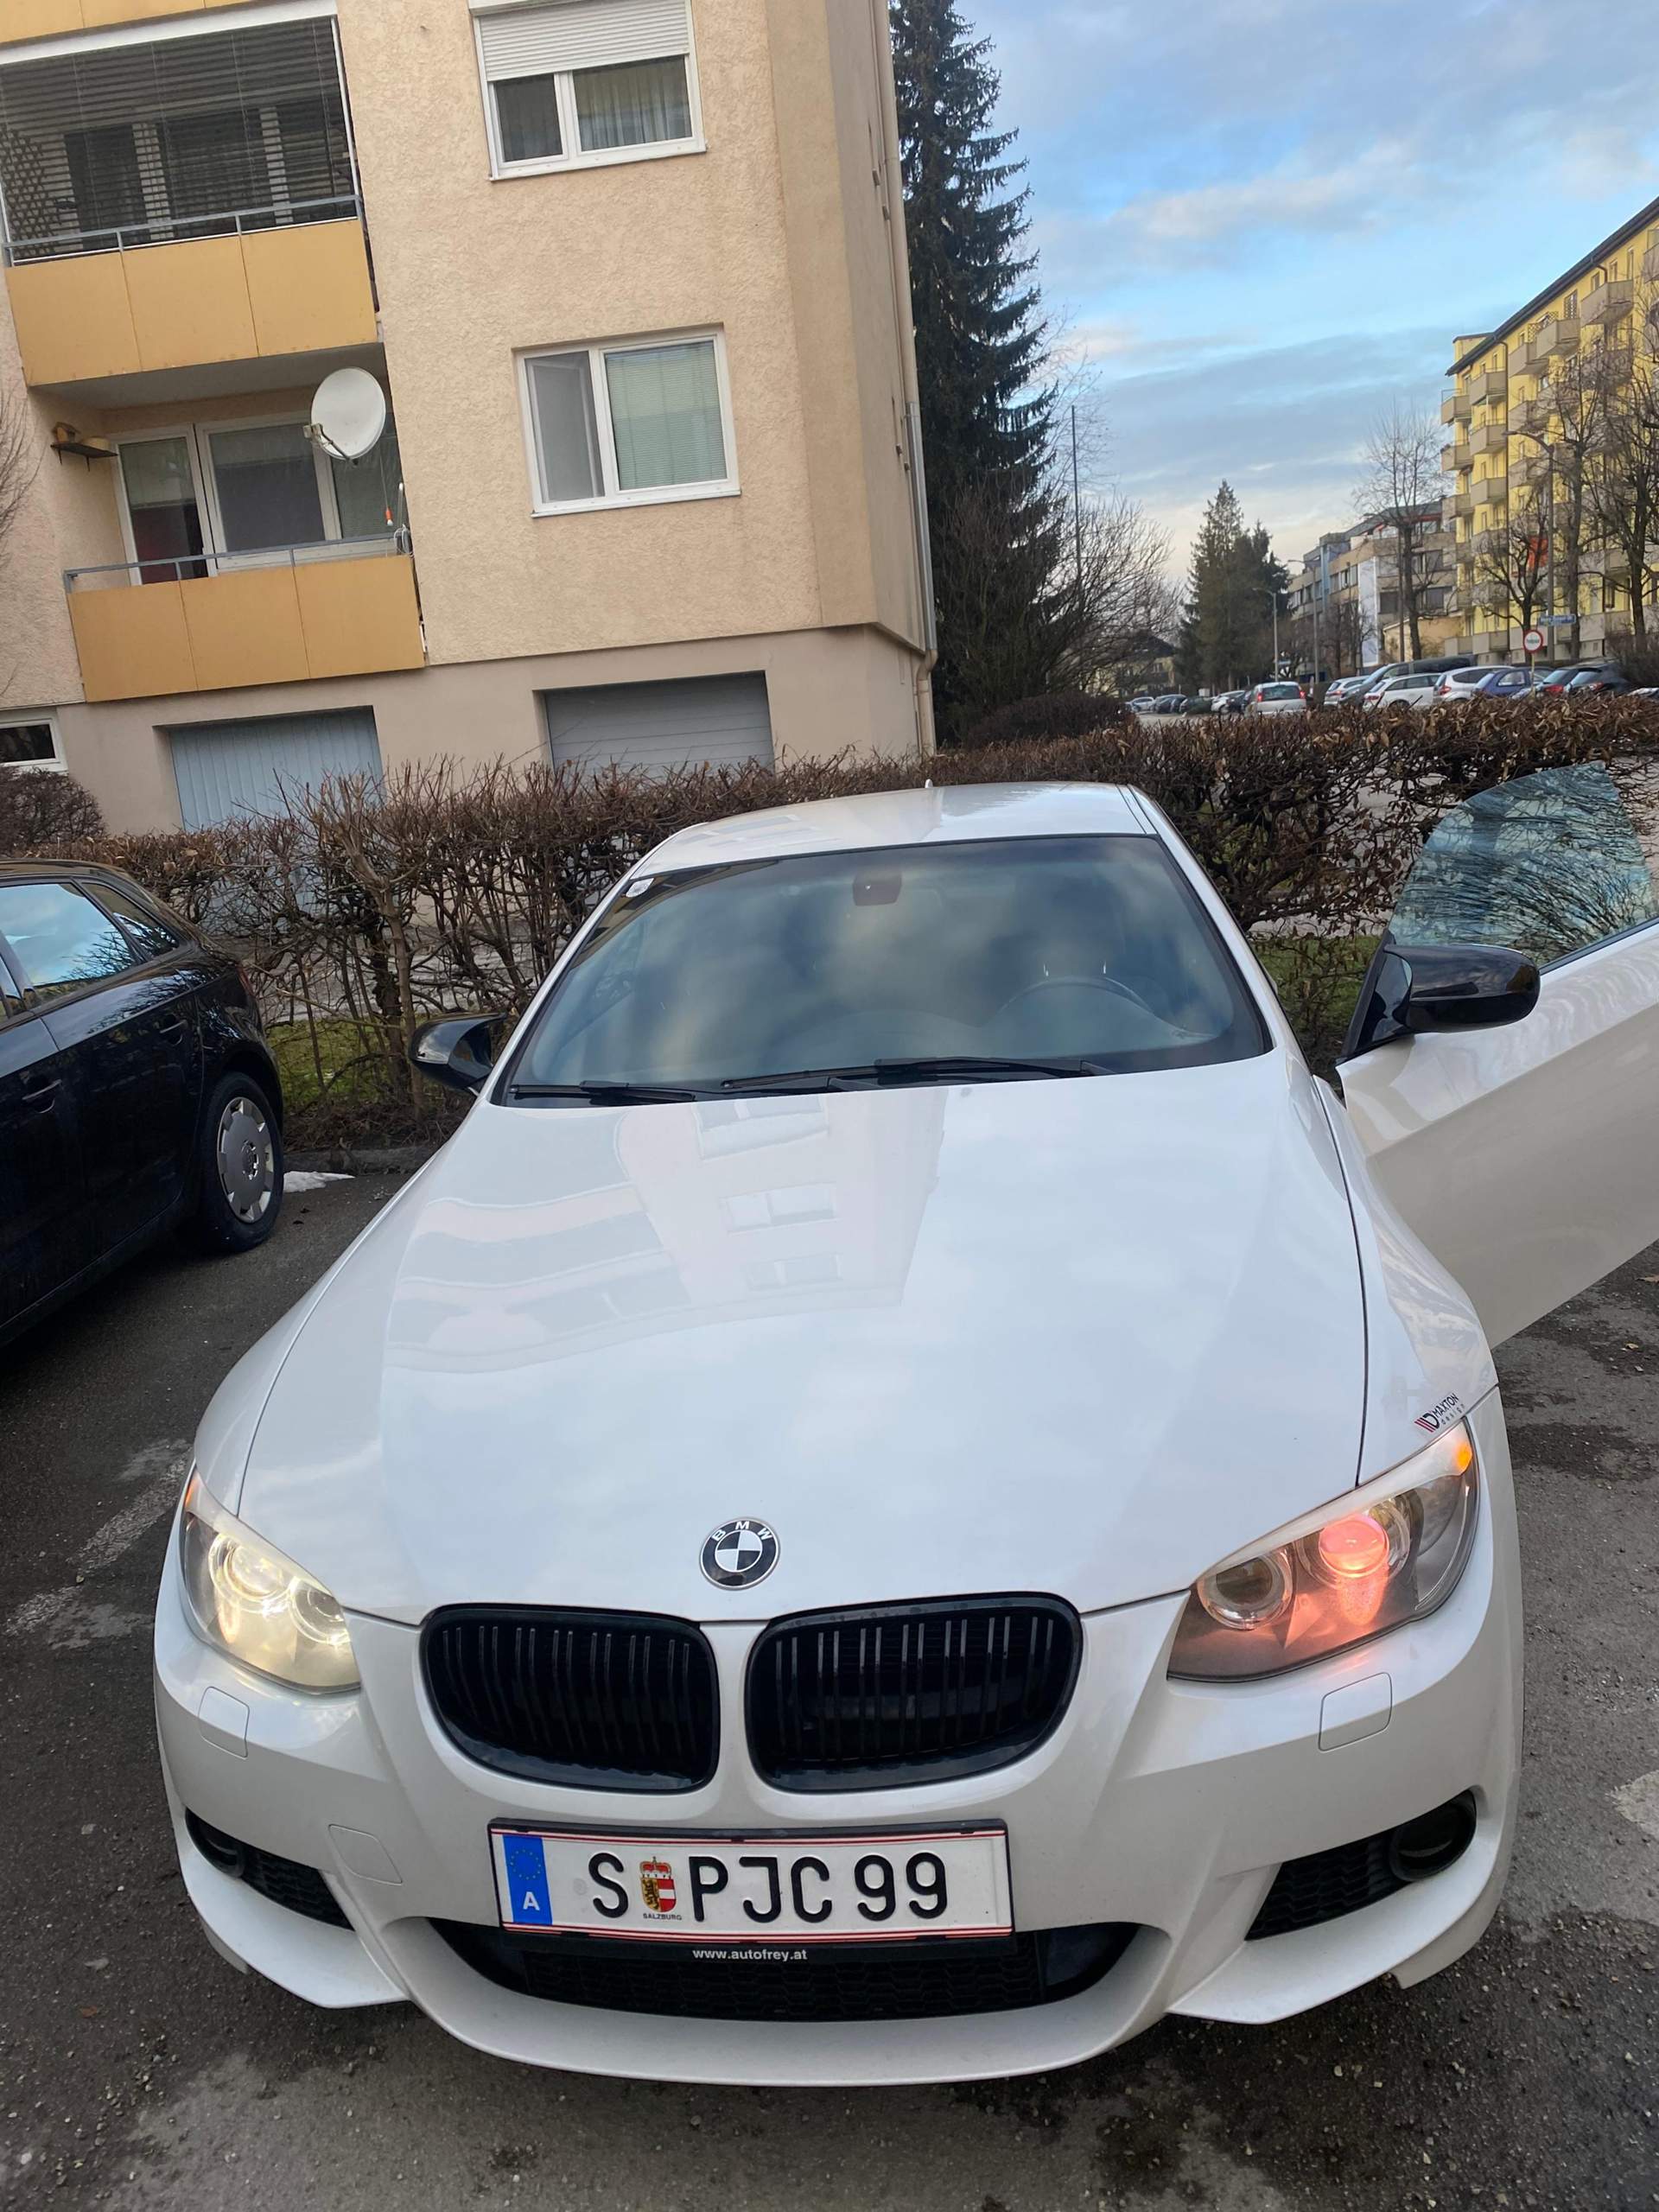 BMW e92 Scheinwerfer rot? (Technik, Technologie, Auto)